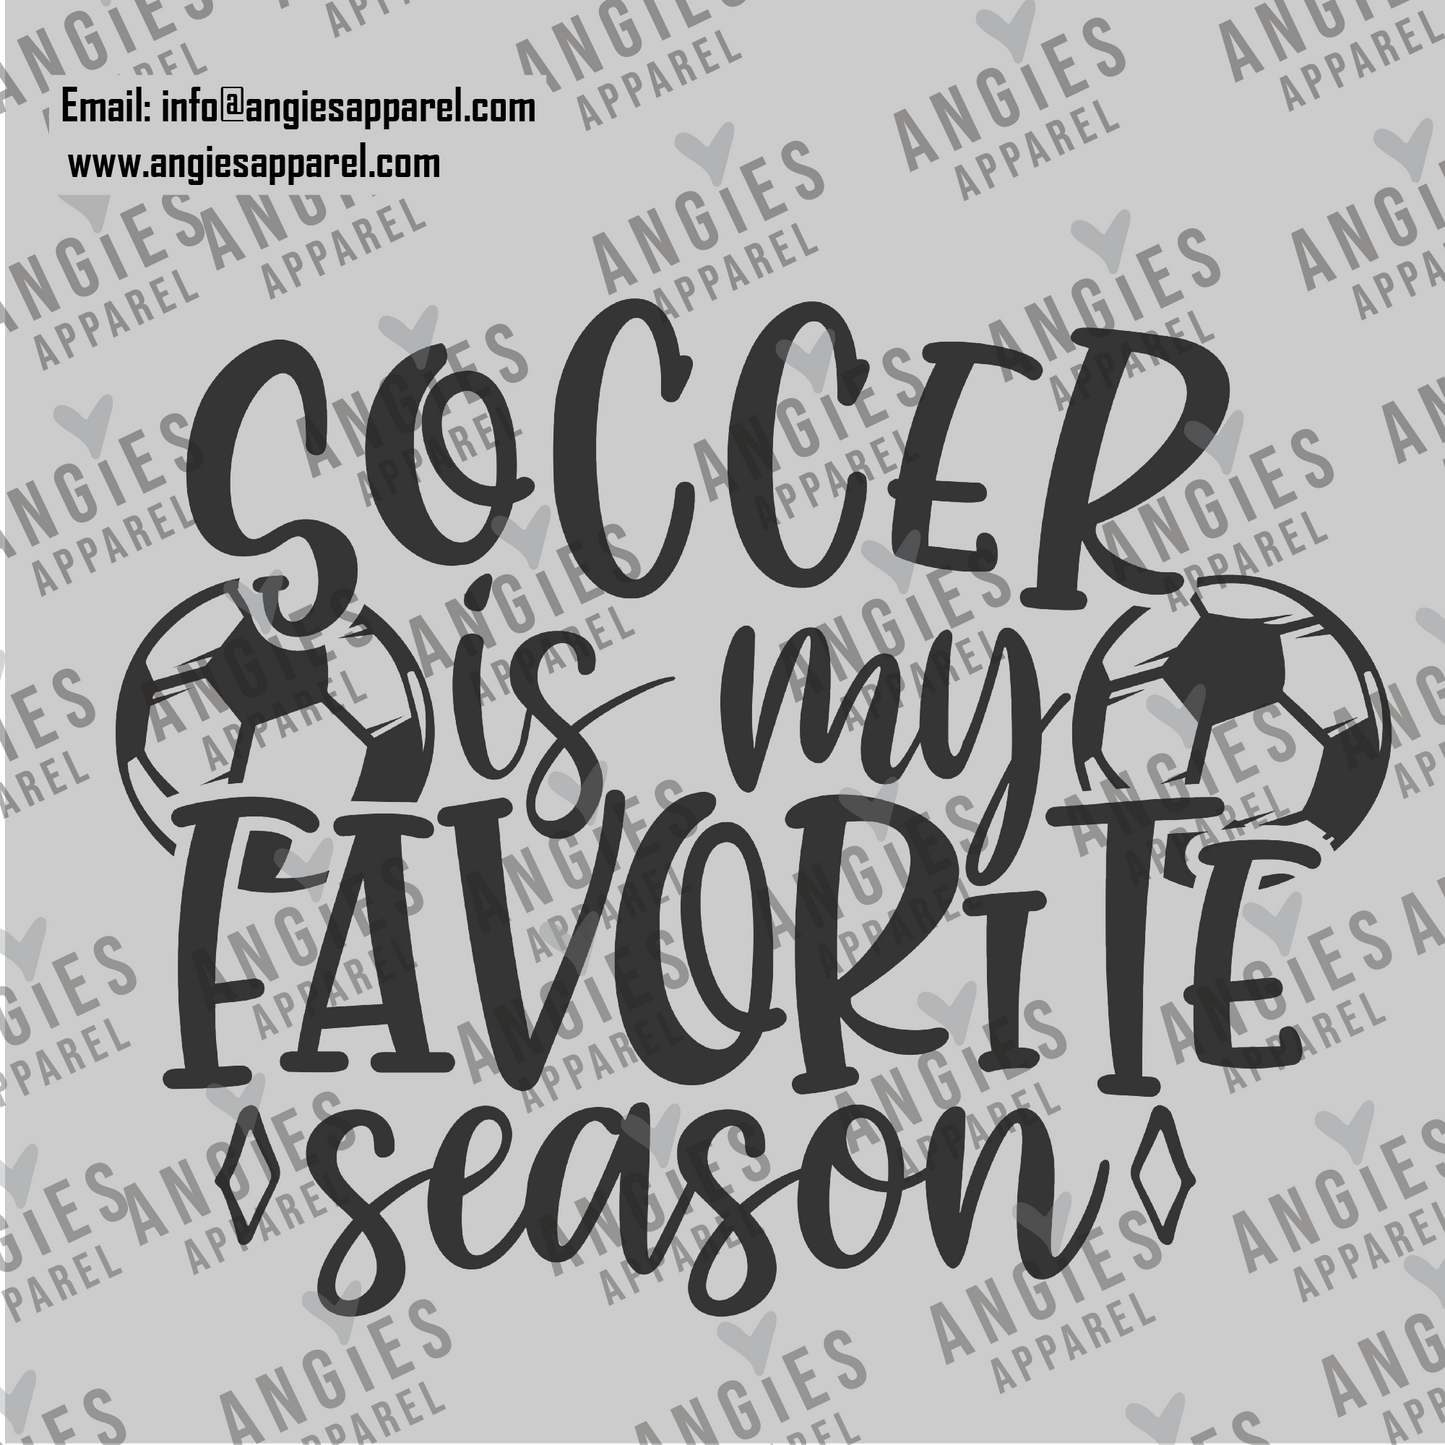 15. Soccer Favorite Season